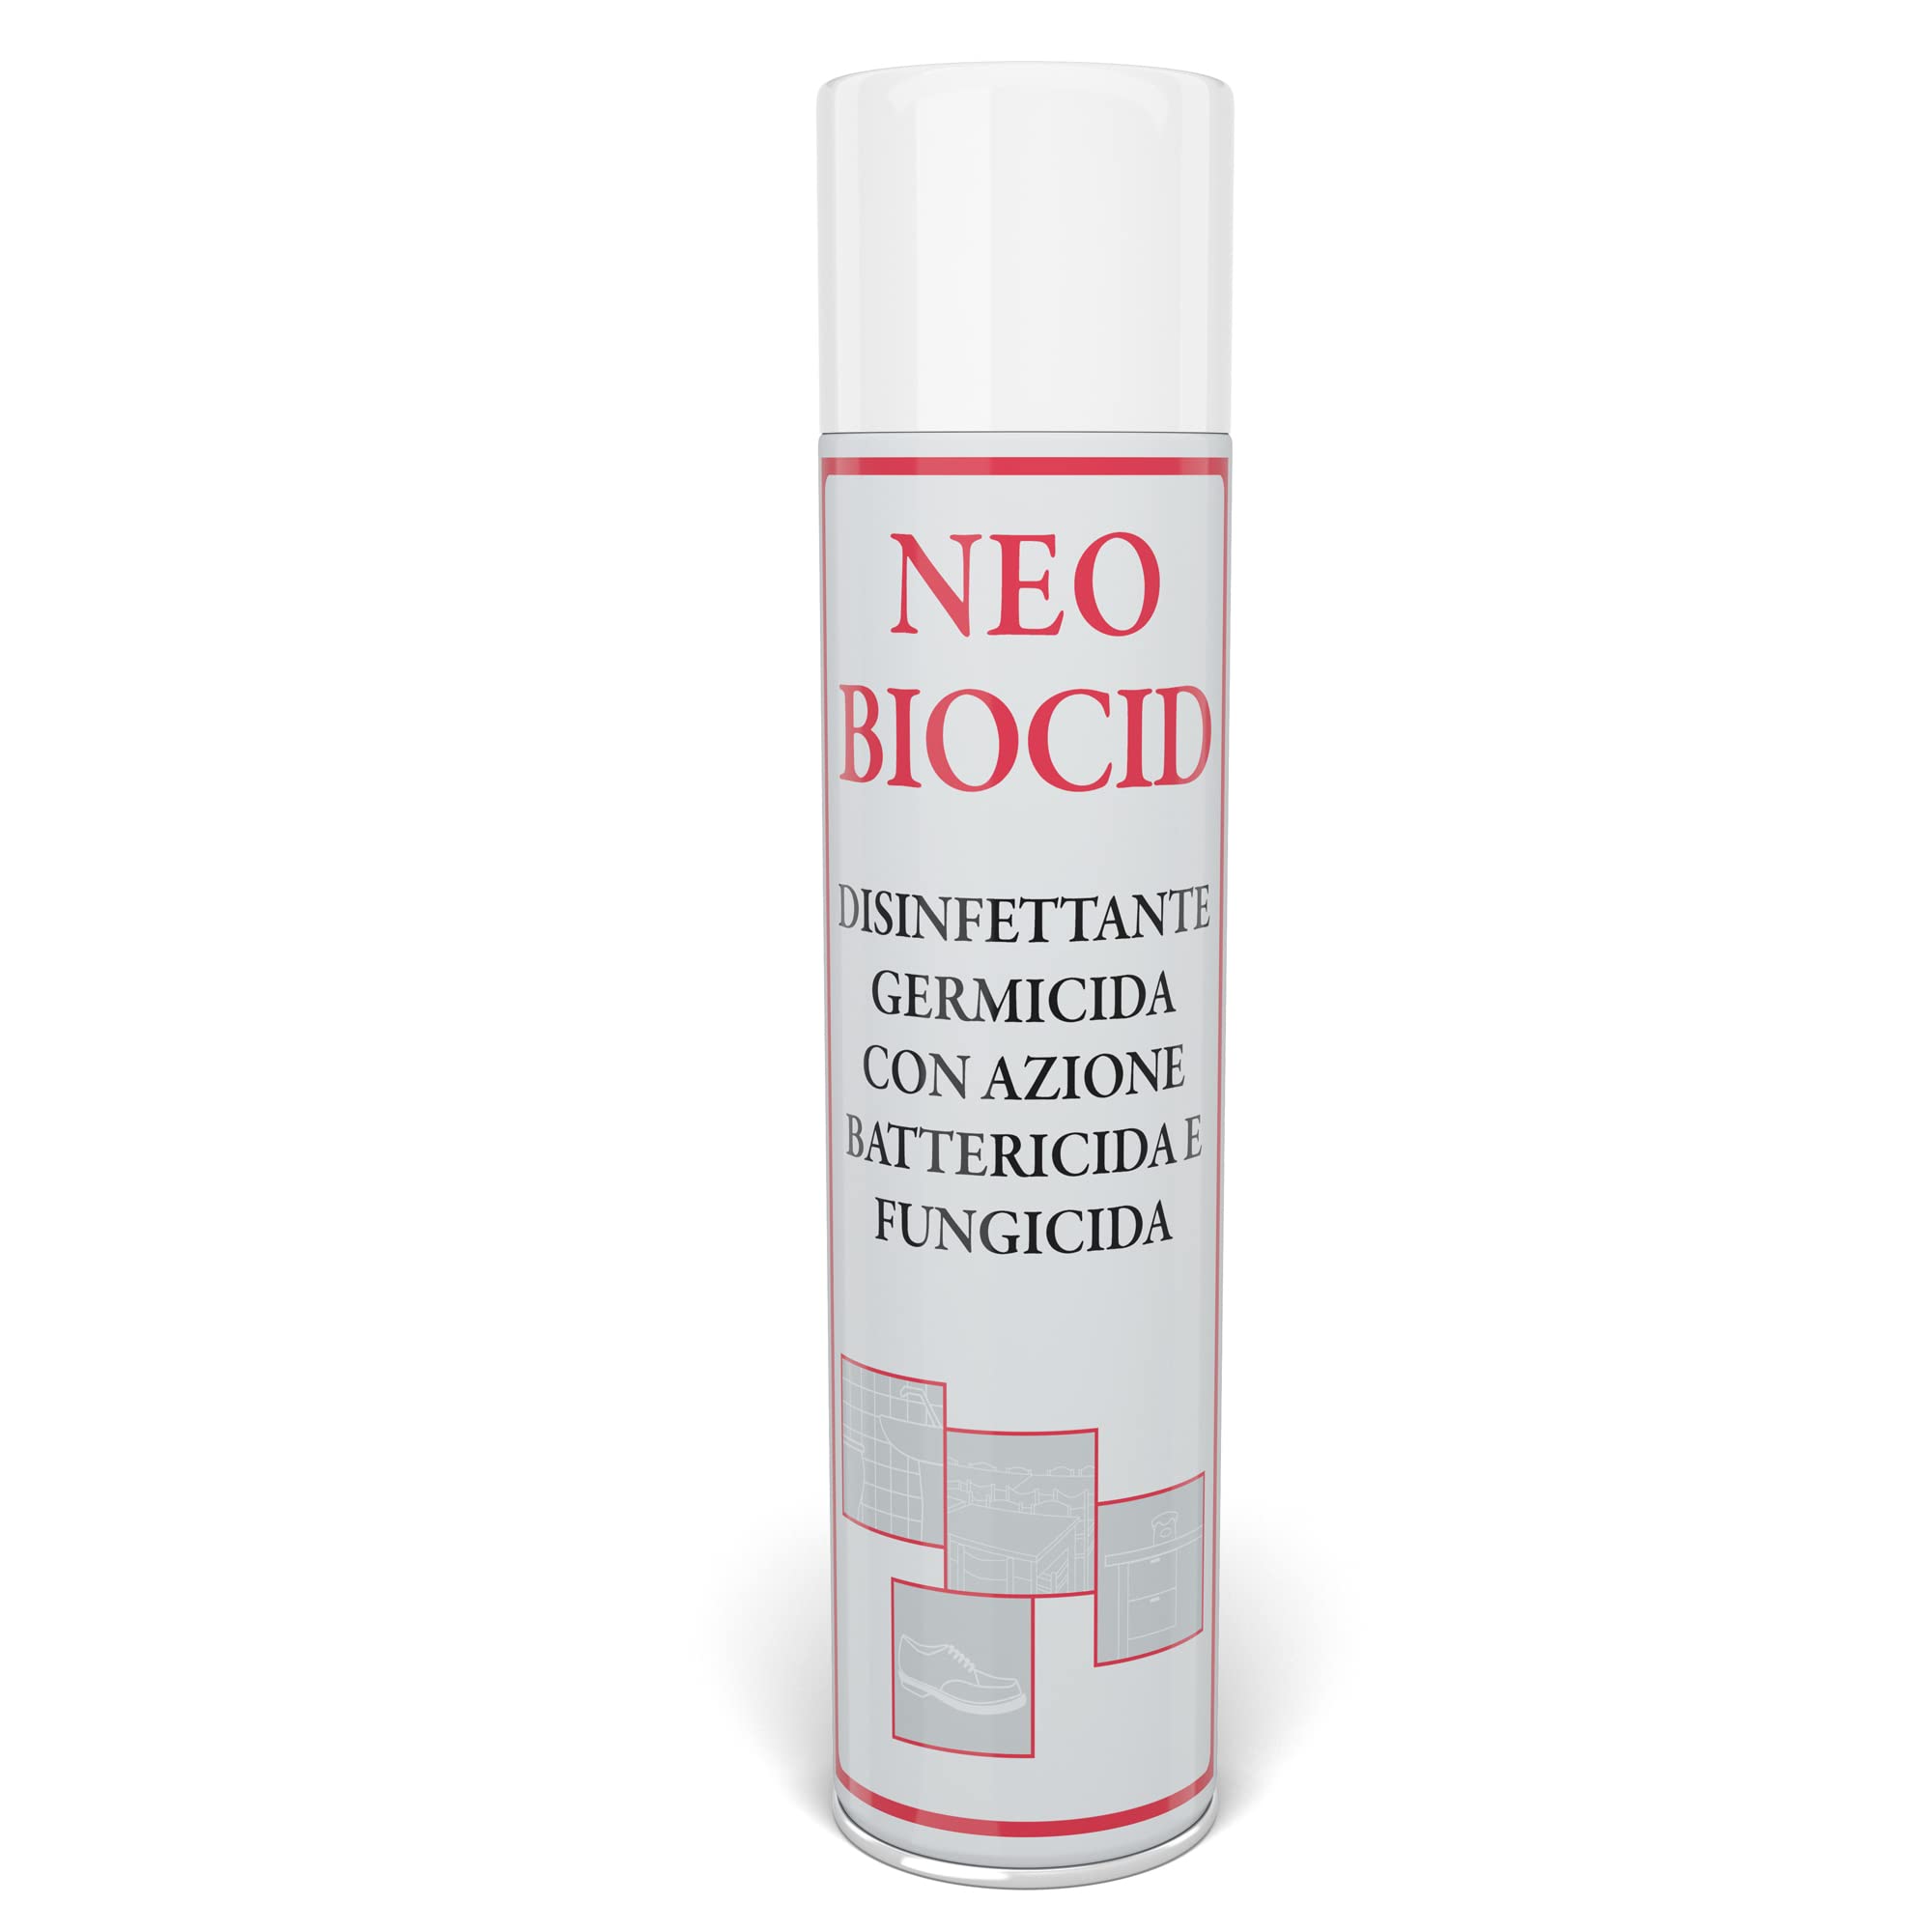 Neo biocid disinfettante spray ml.400